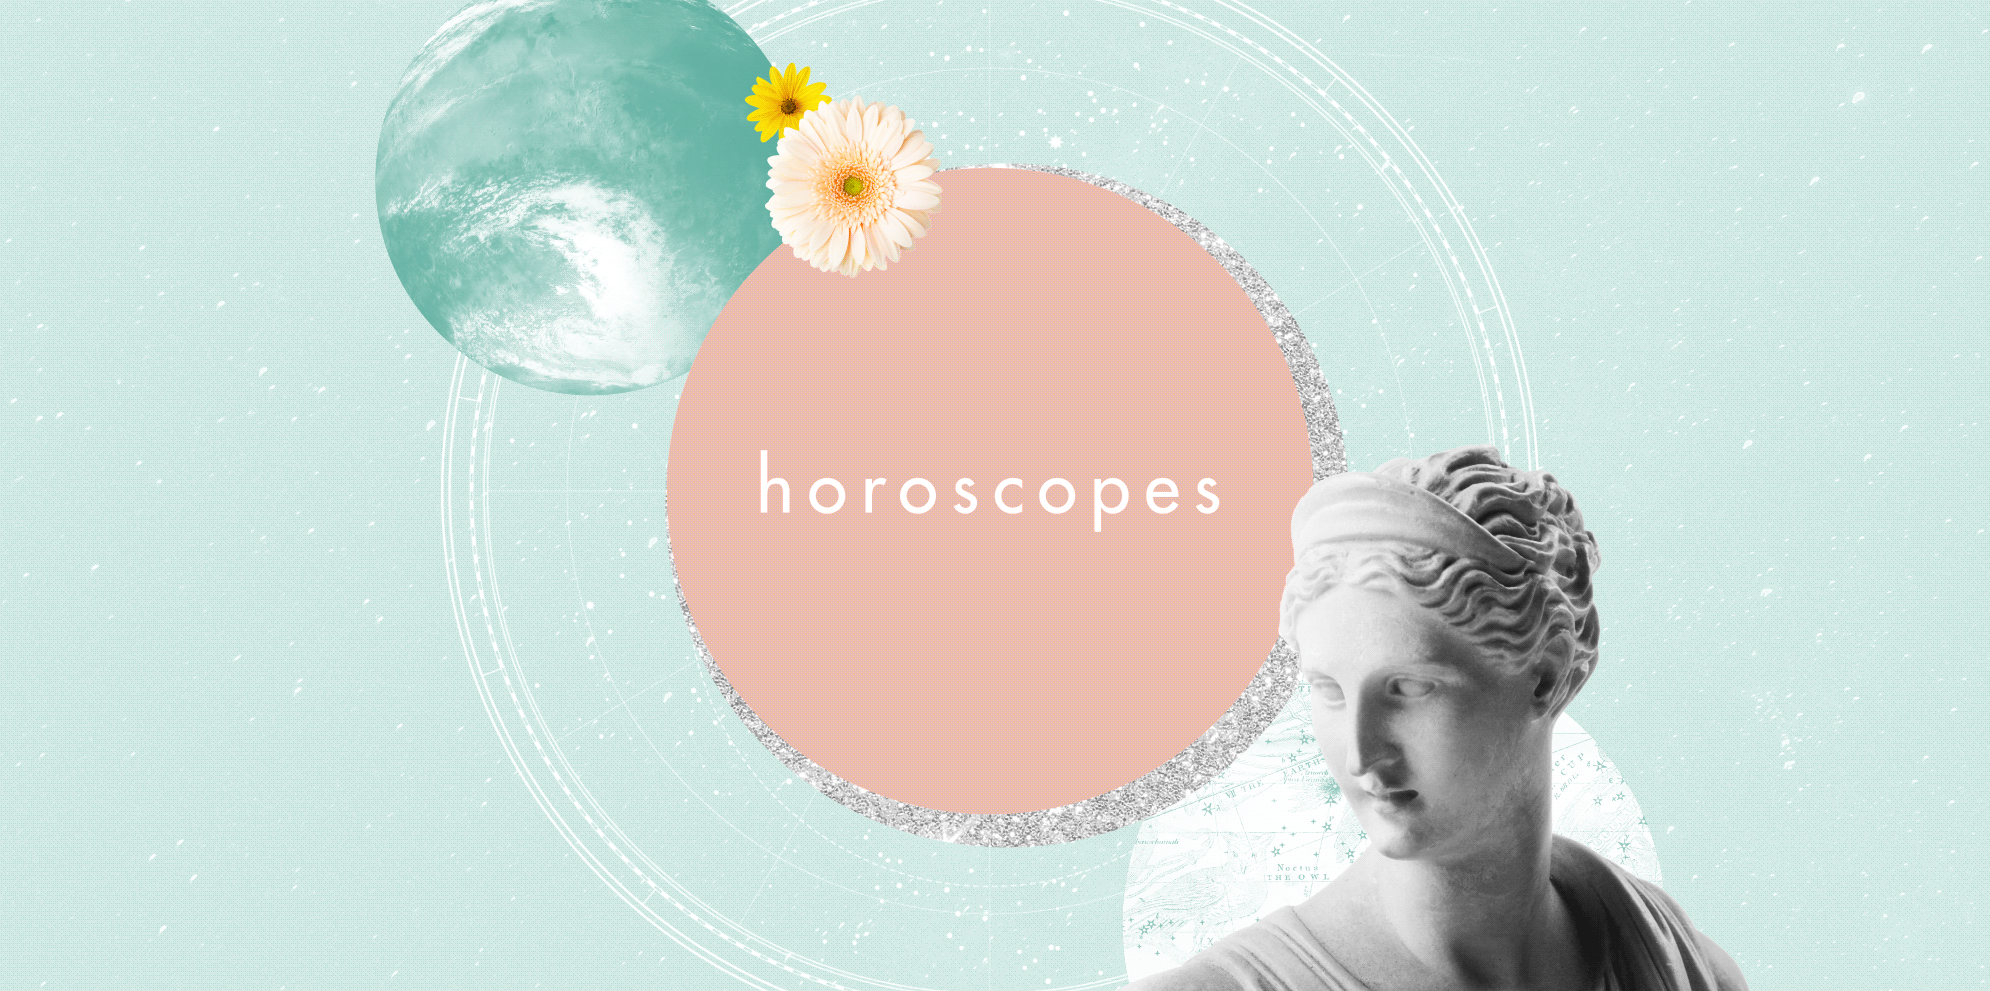 Scorpio Weekly Horoscope 21 - 27 December, 2020